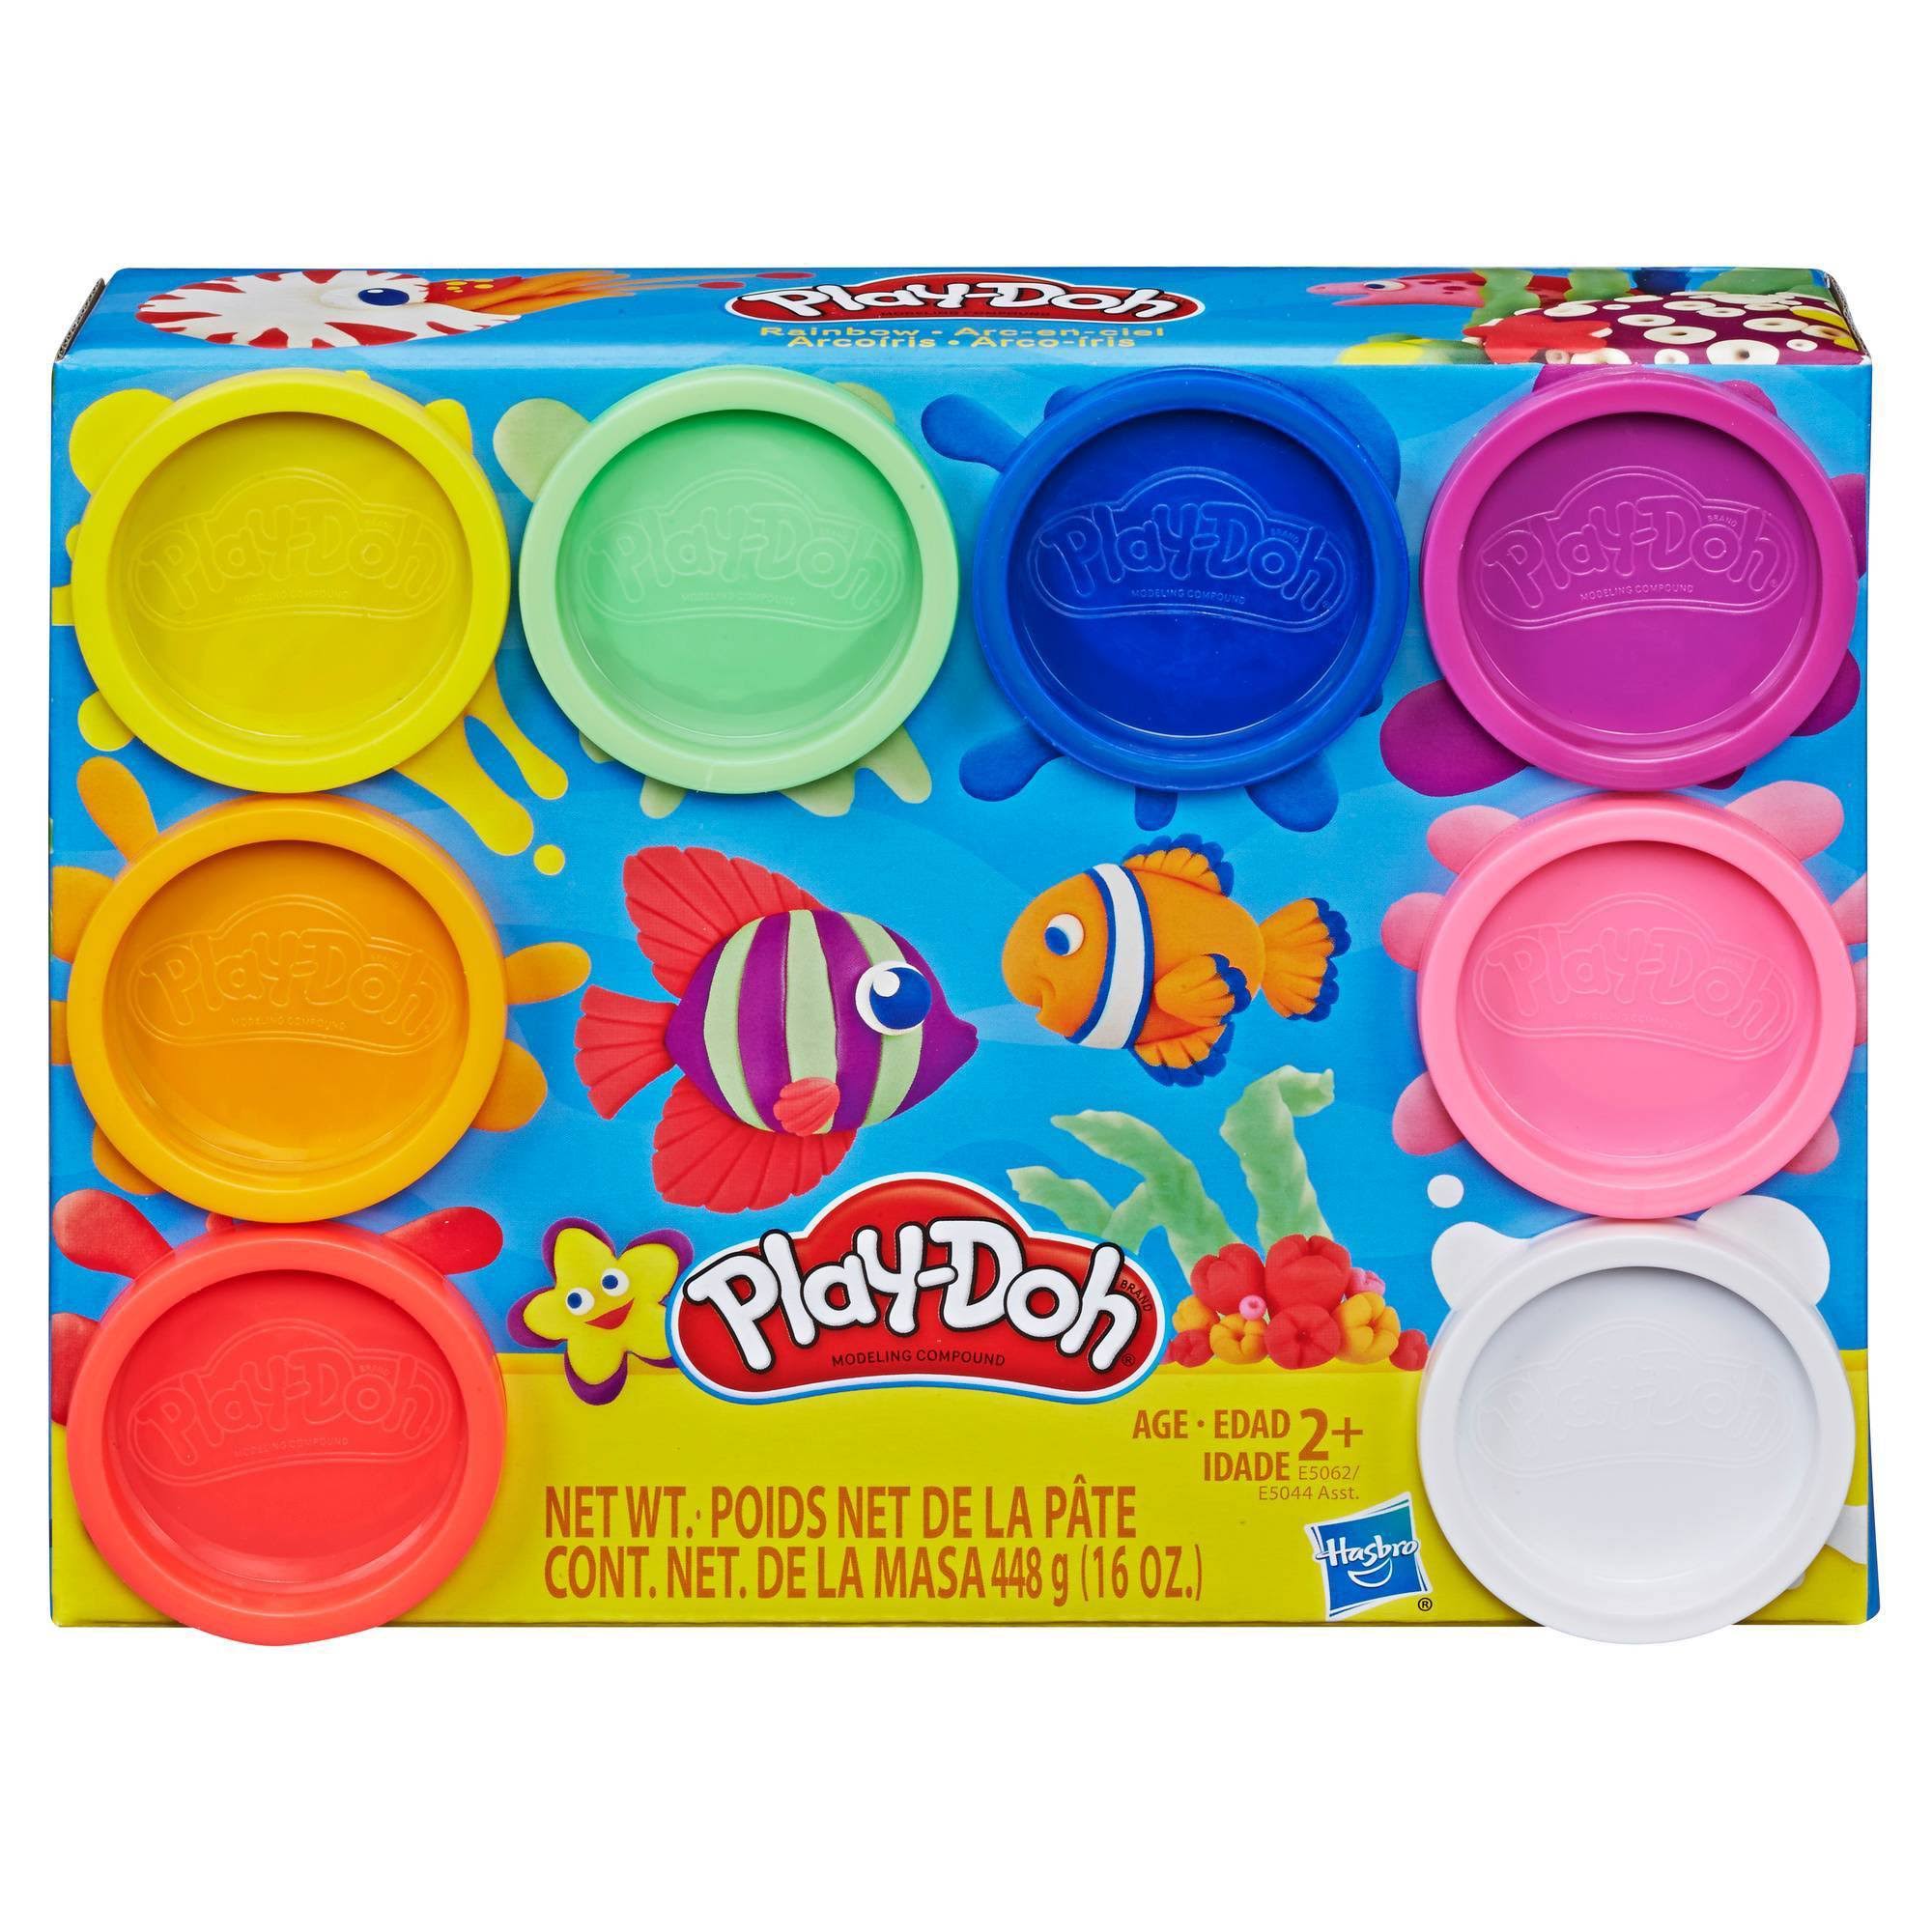 Hasbro Play-doh Rainbow Non-toxic Modeling Compound - 8pk